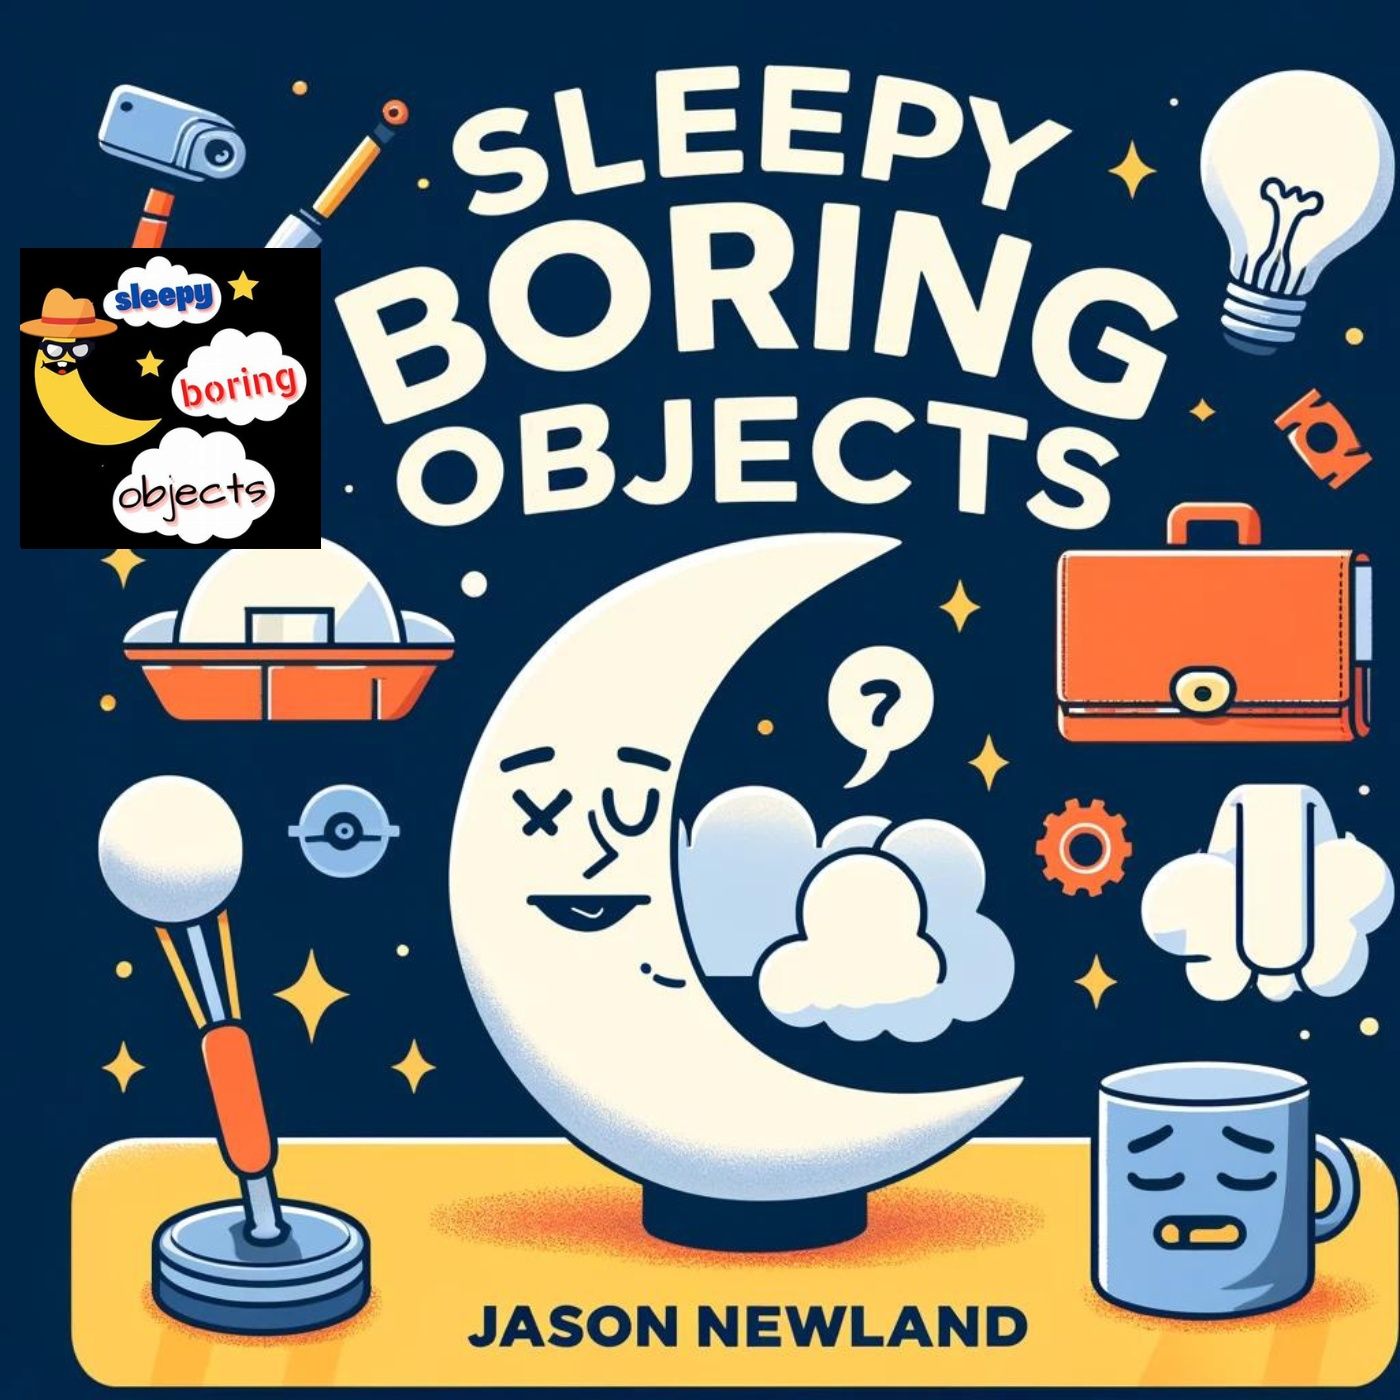 #22 “Jobs” SLEEPY Boring Objects (Jason Newland) (18th October 2021)